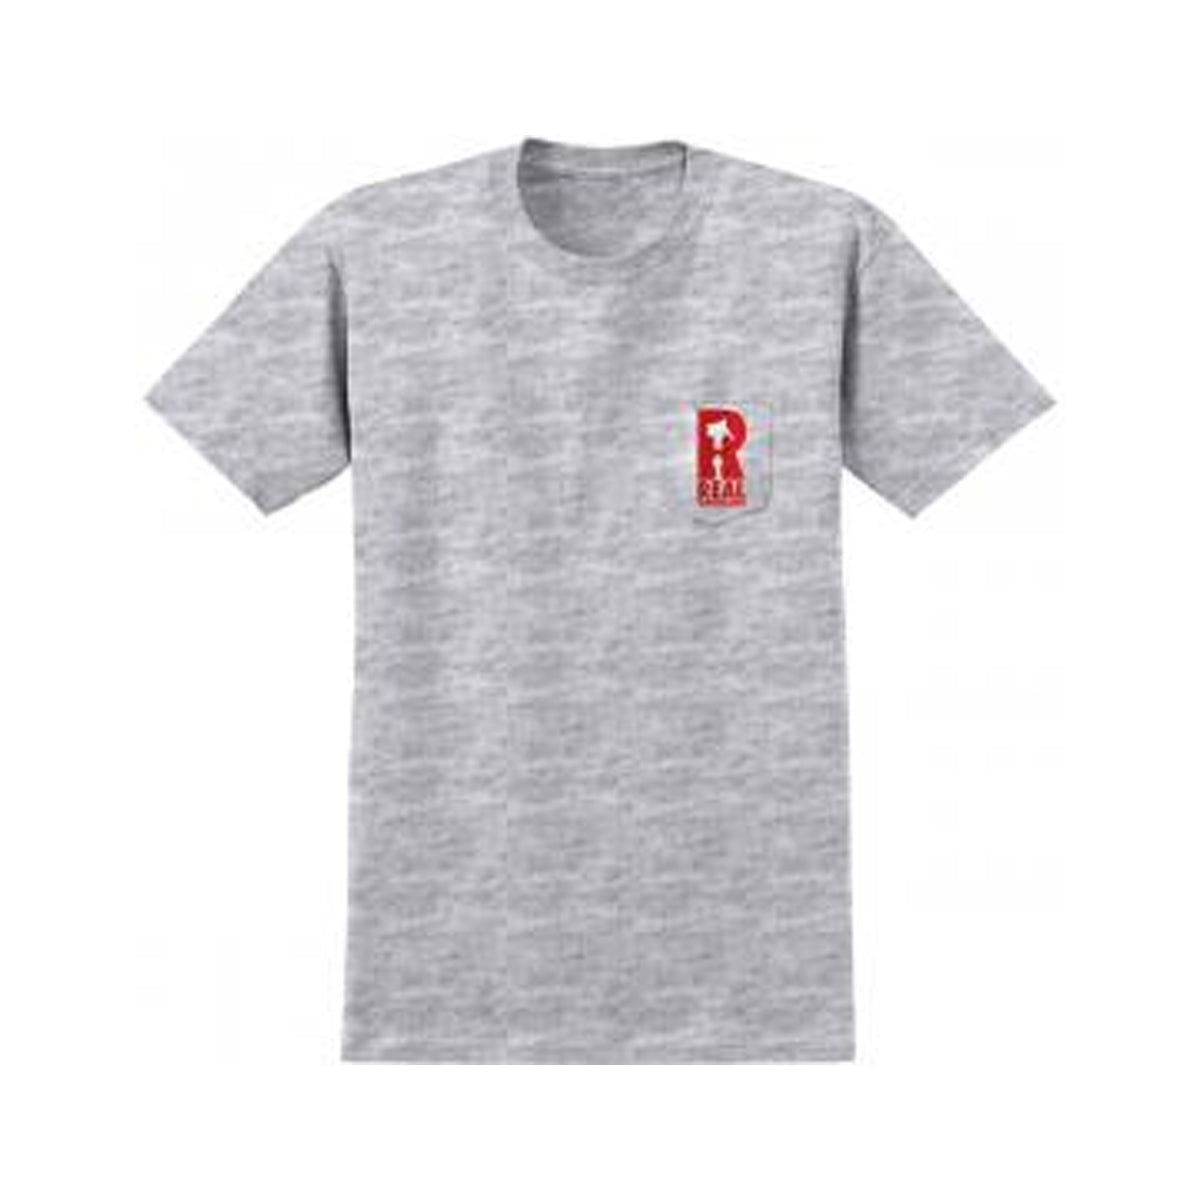 Real Hydrant Short Sleeve Pocket T-Shirt (Ash/Red) - Apple Valley Emporium